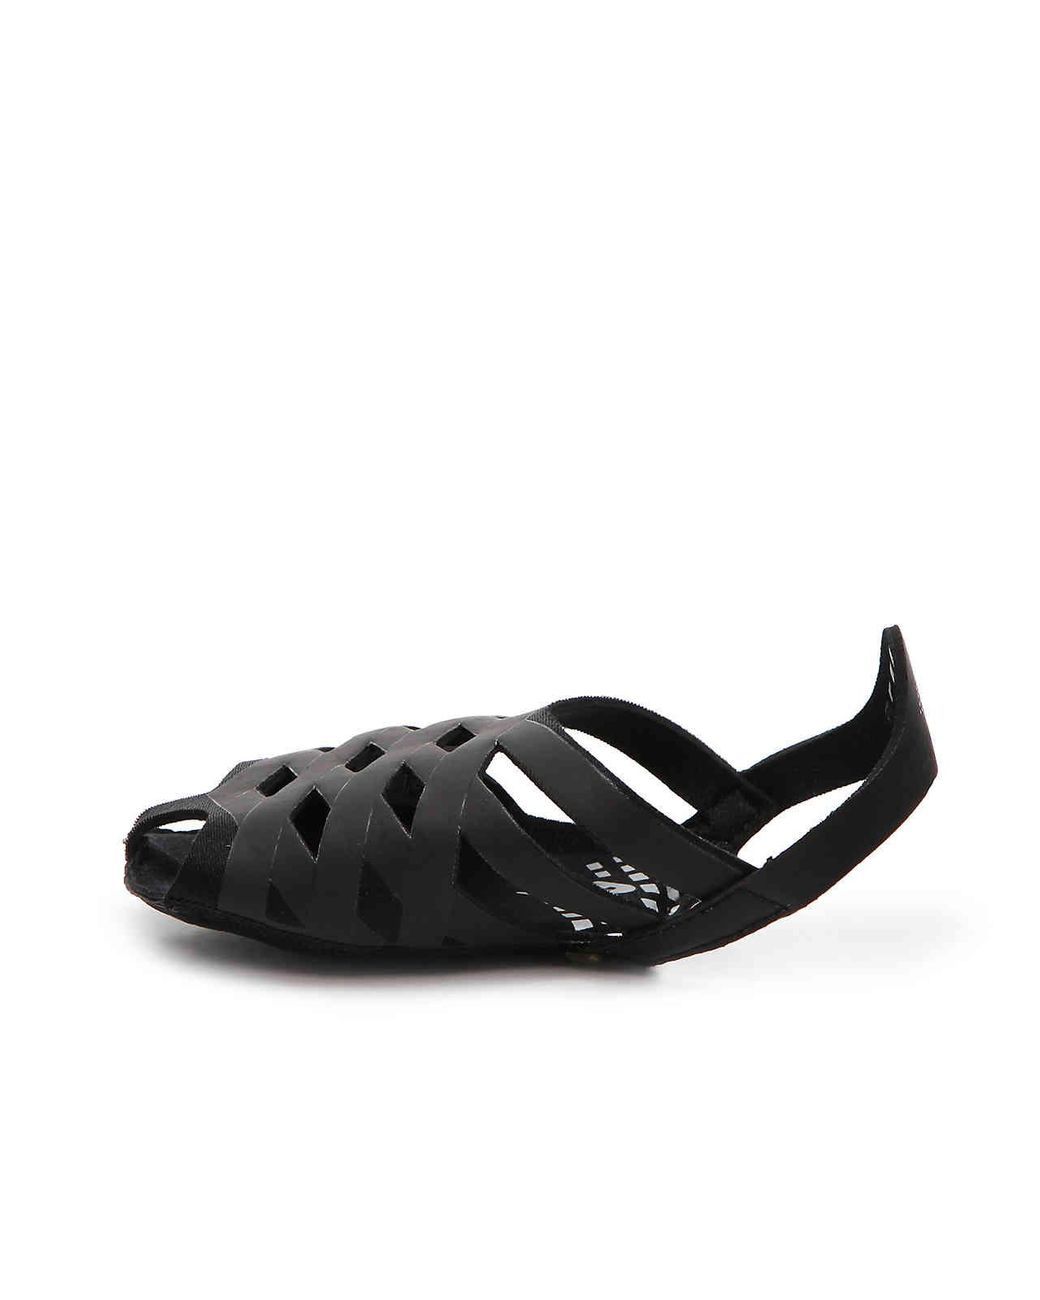 New Balance Nb Studio Skin 118 Yoga Training Shoe in Black | Lyst